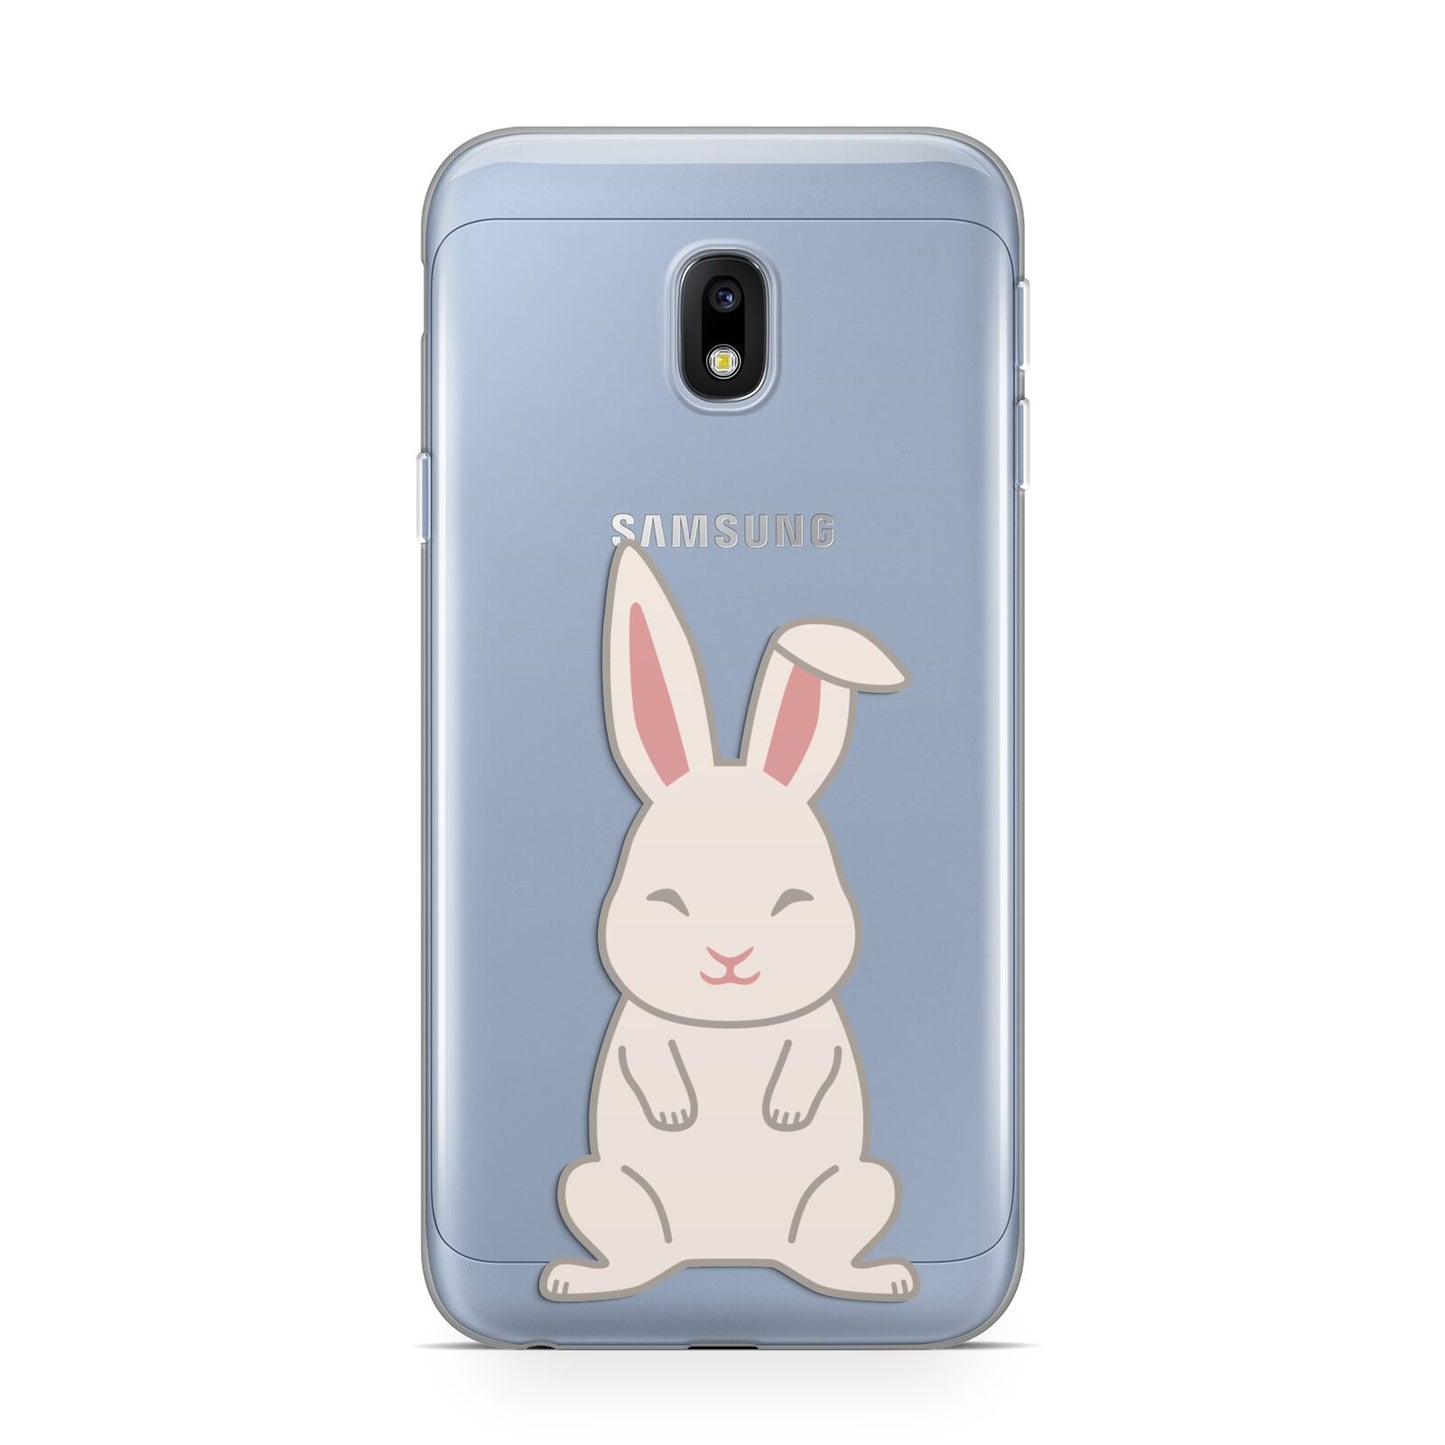 Bunny Samsung Galaxy J3 2017 Case